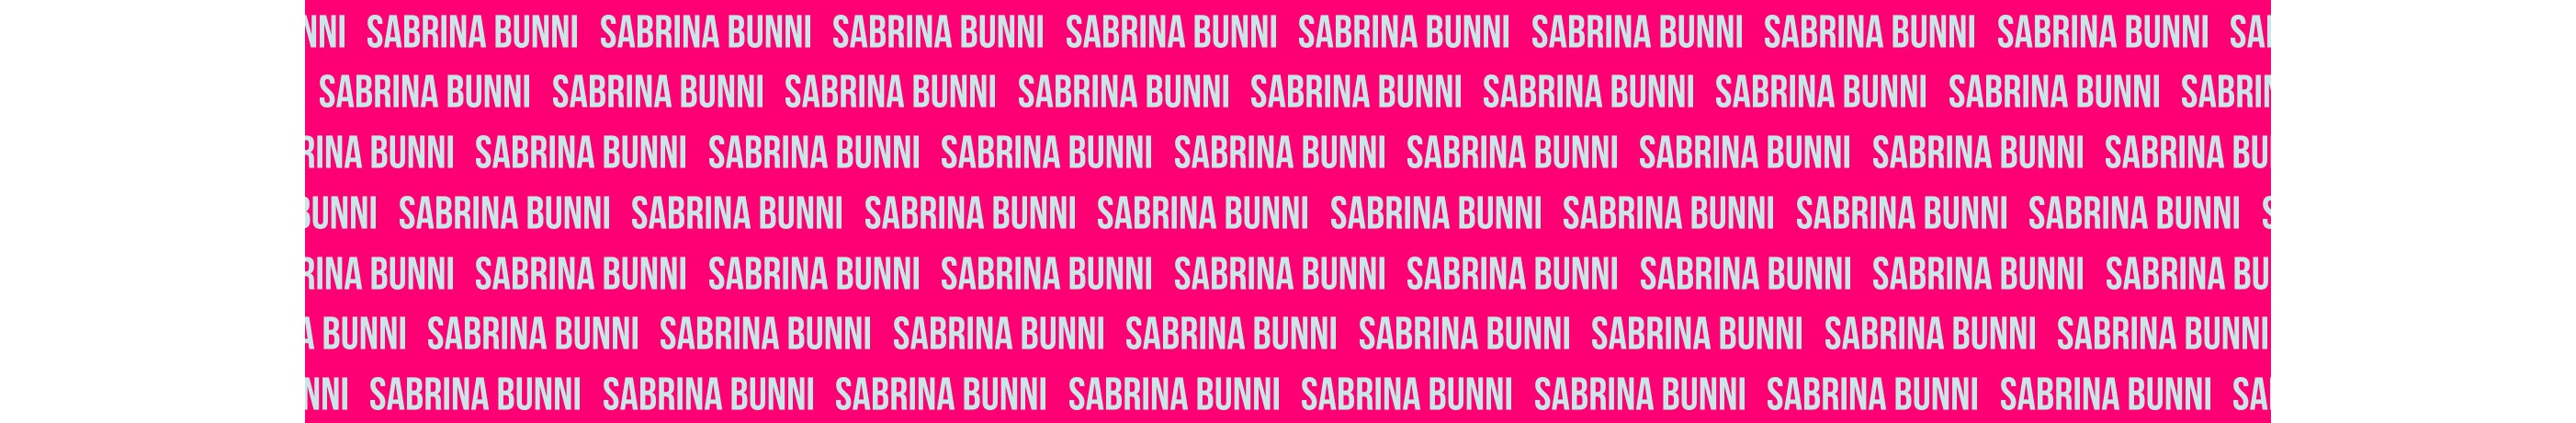 Sabrina Bunni - profile image